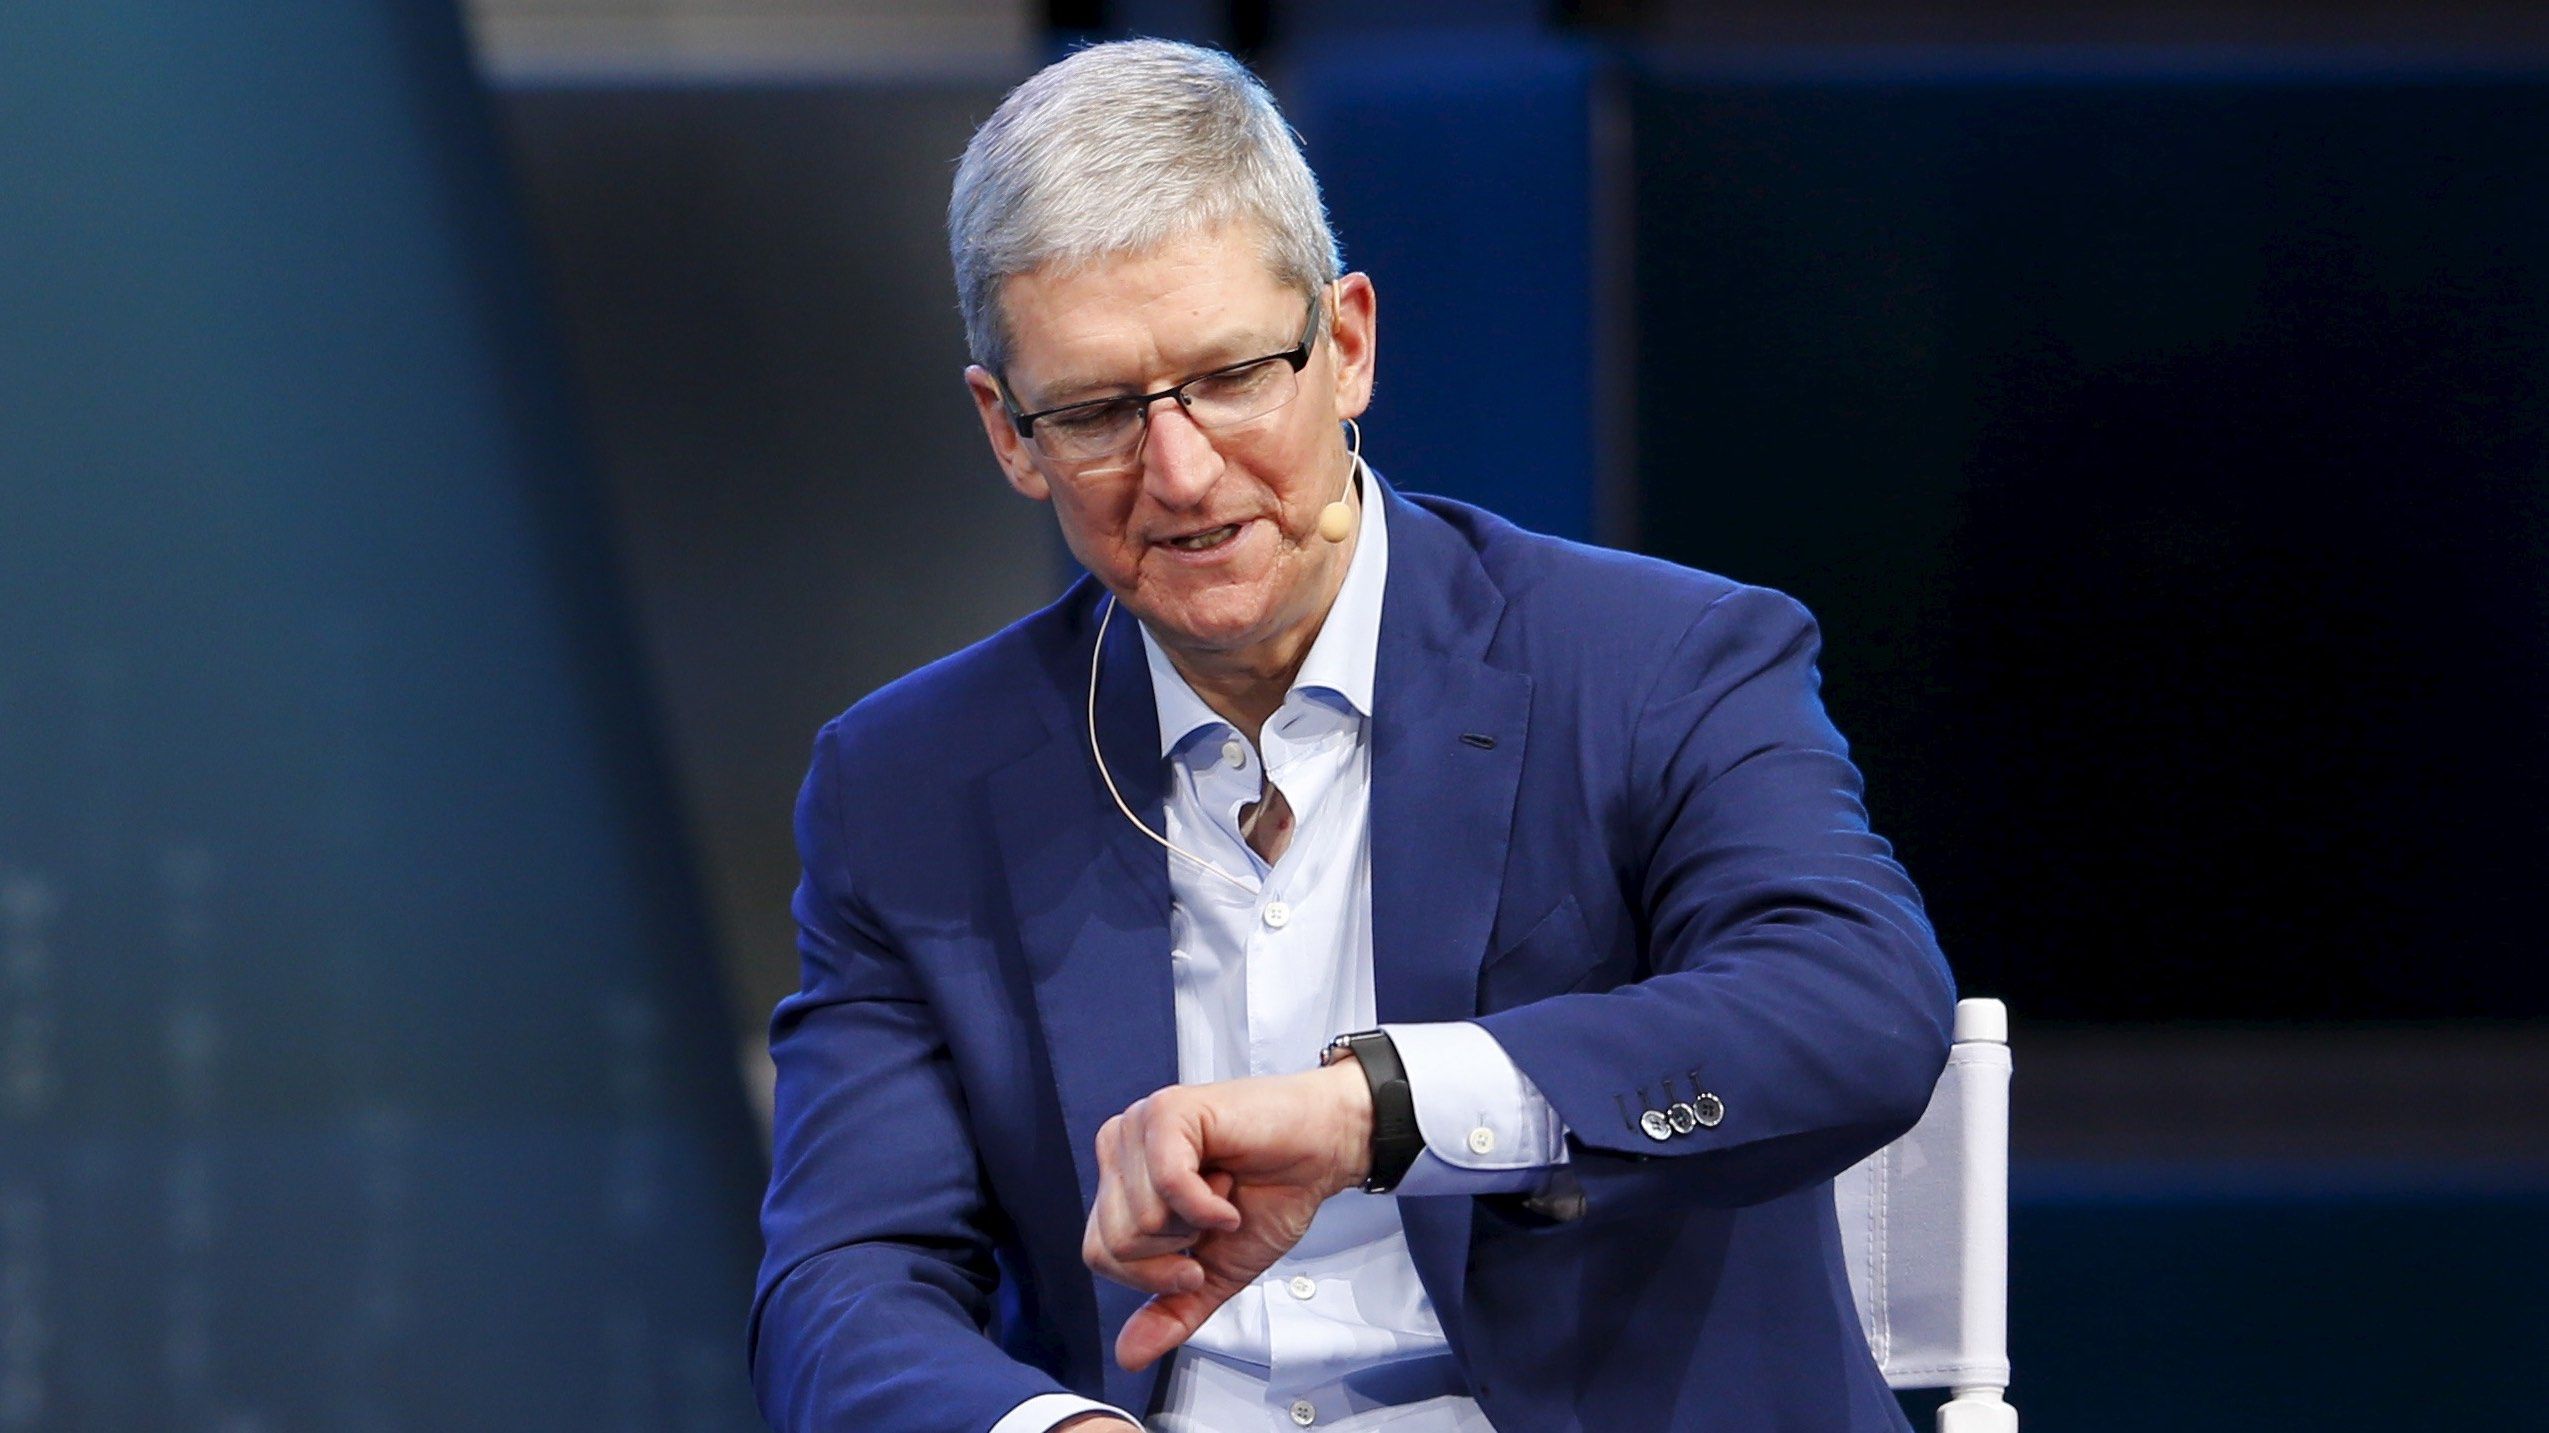 "Apple Watch Feels Like a Stalled Platform"